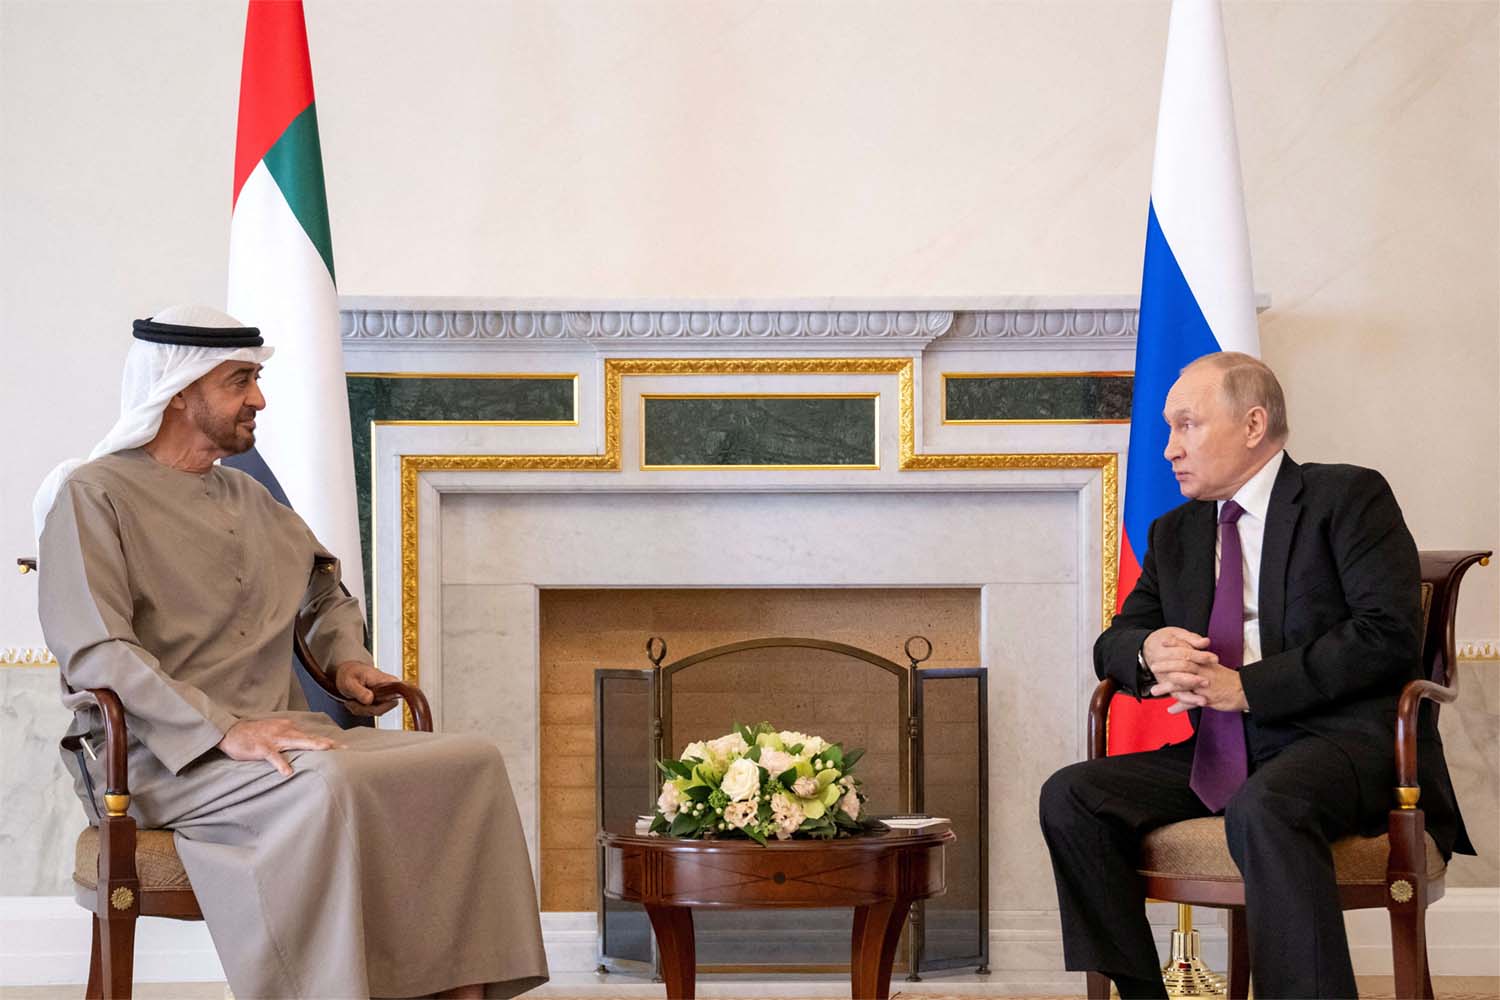 UAE President Sheikh Mohamed bin Zayed Al-Nahyan met with Russia's President Vladimir Putin, in Saint Petersburg October 11